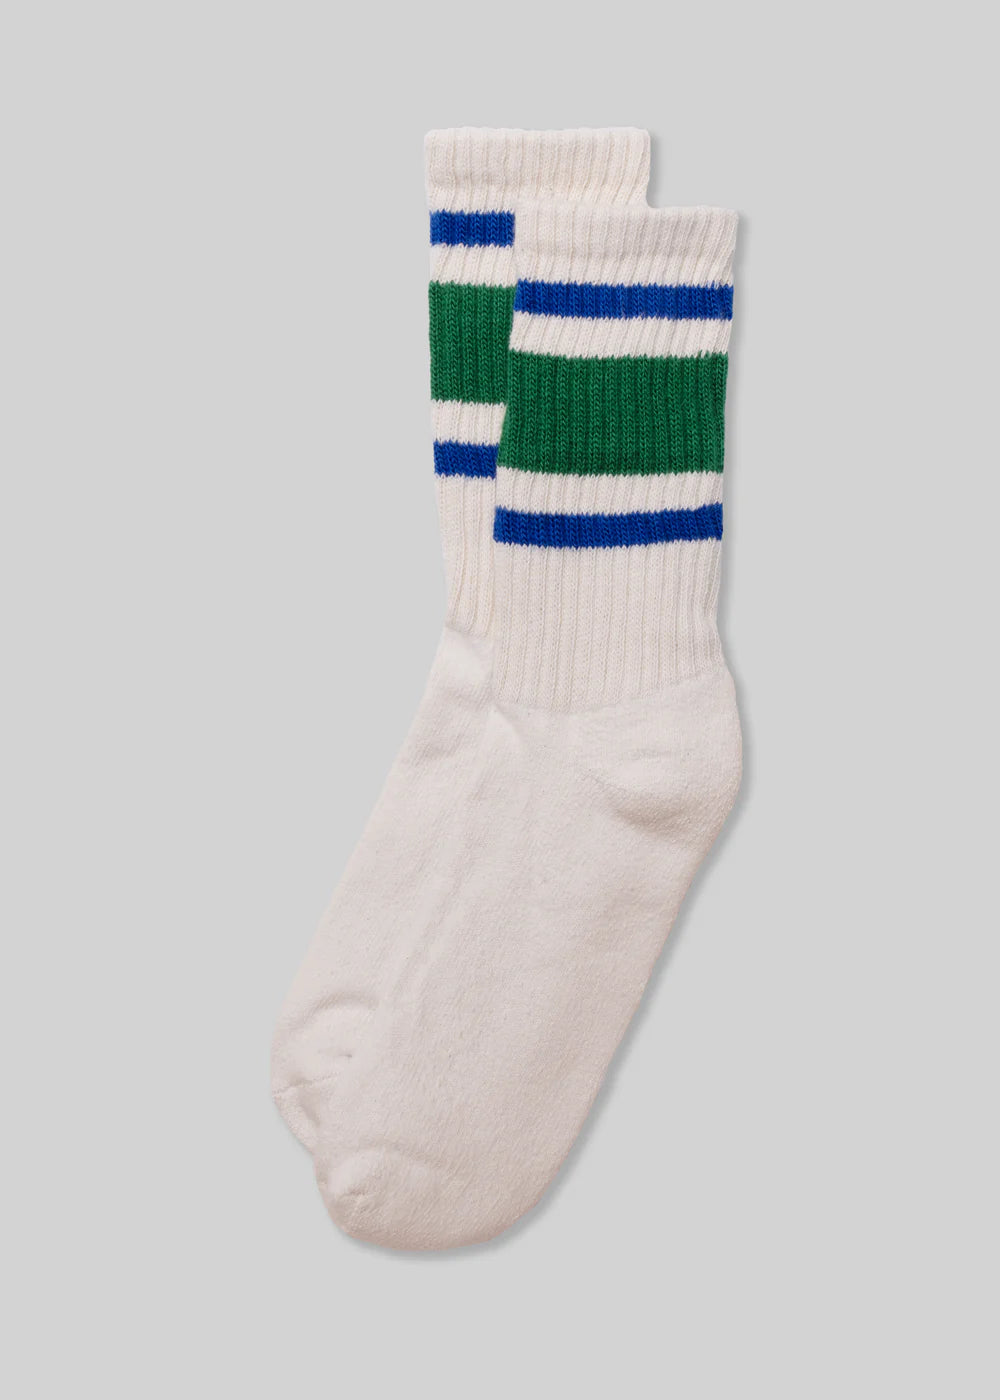 American trench - the retro stripe sock  -  kelly green/royal